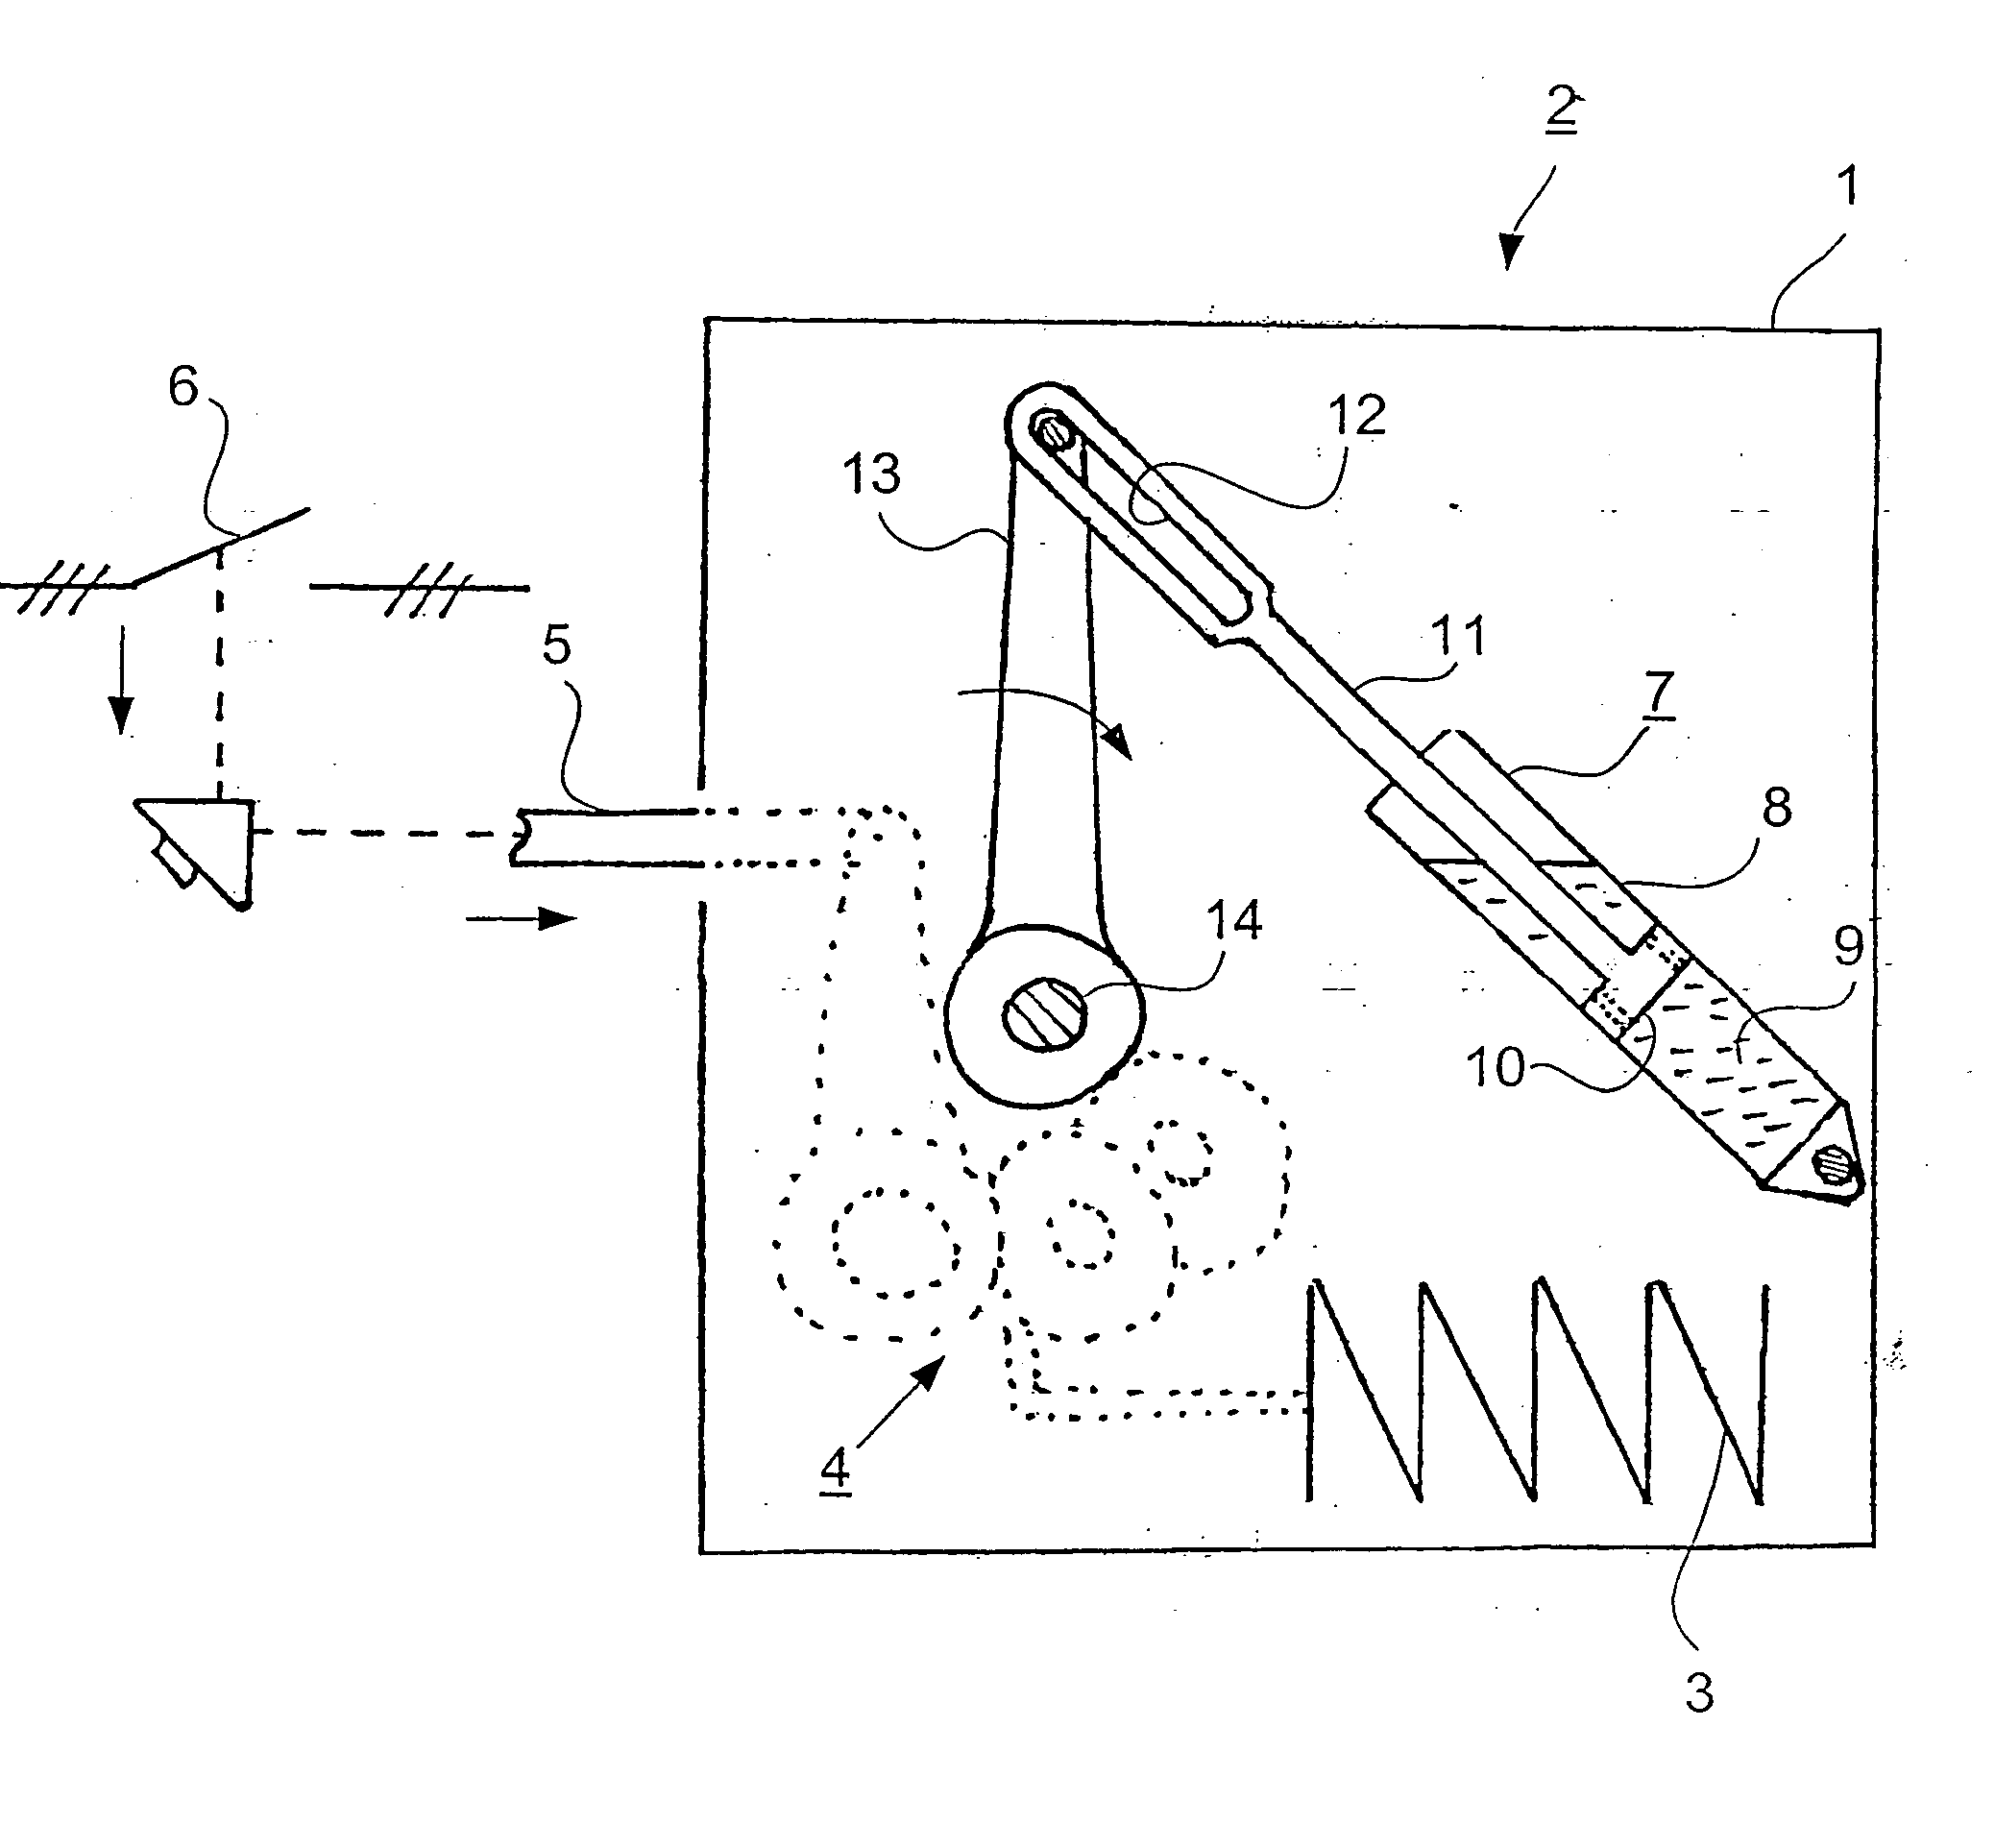 Switch mechanism